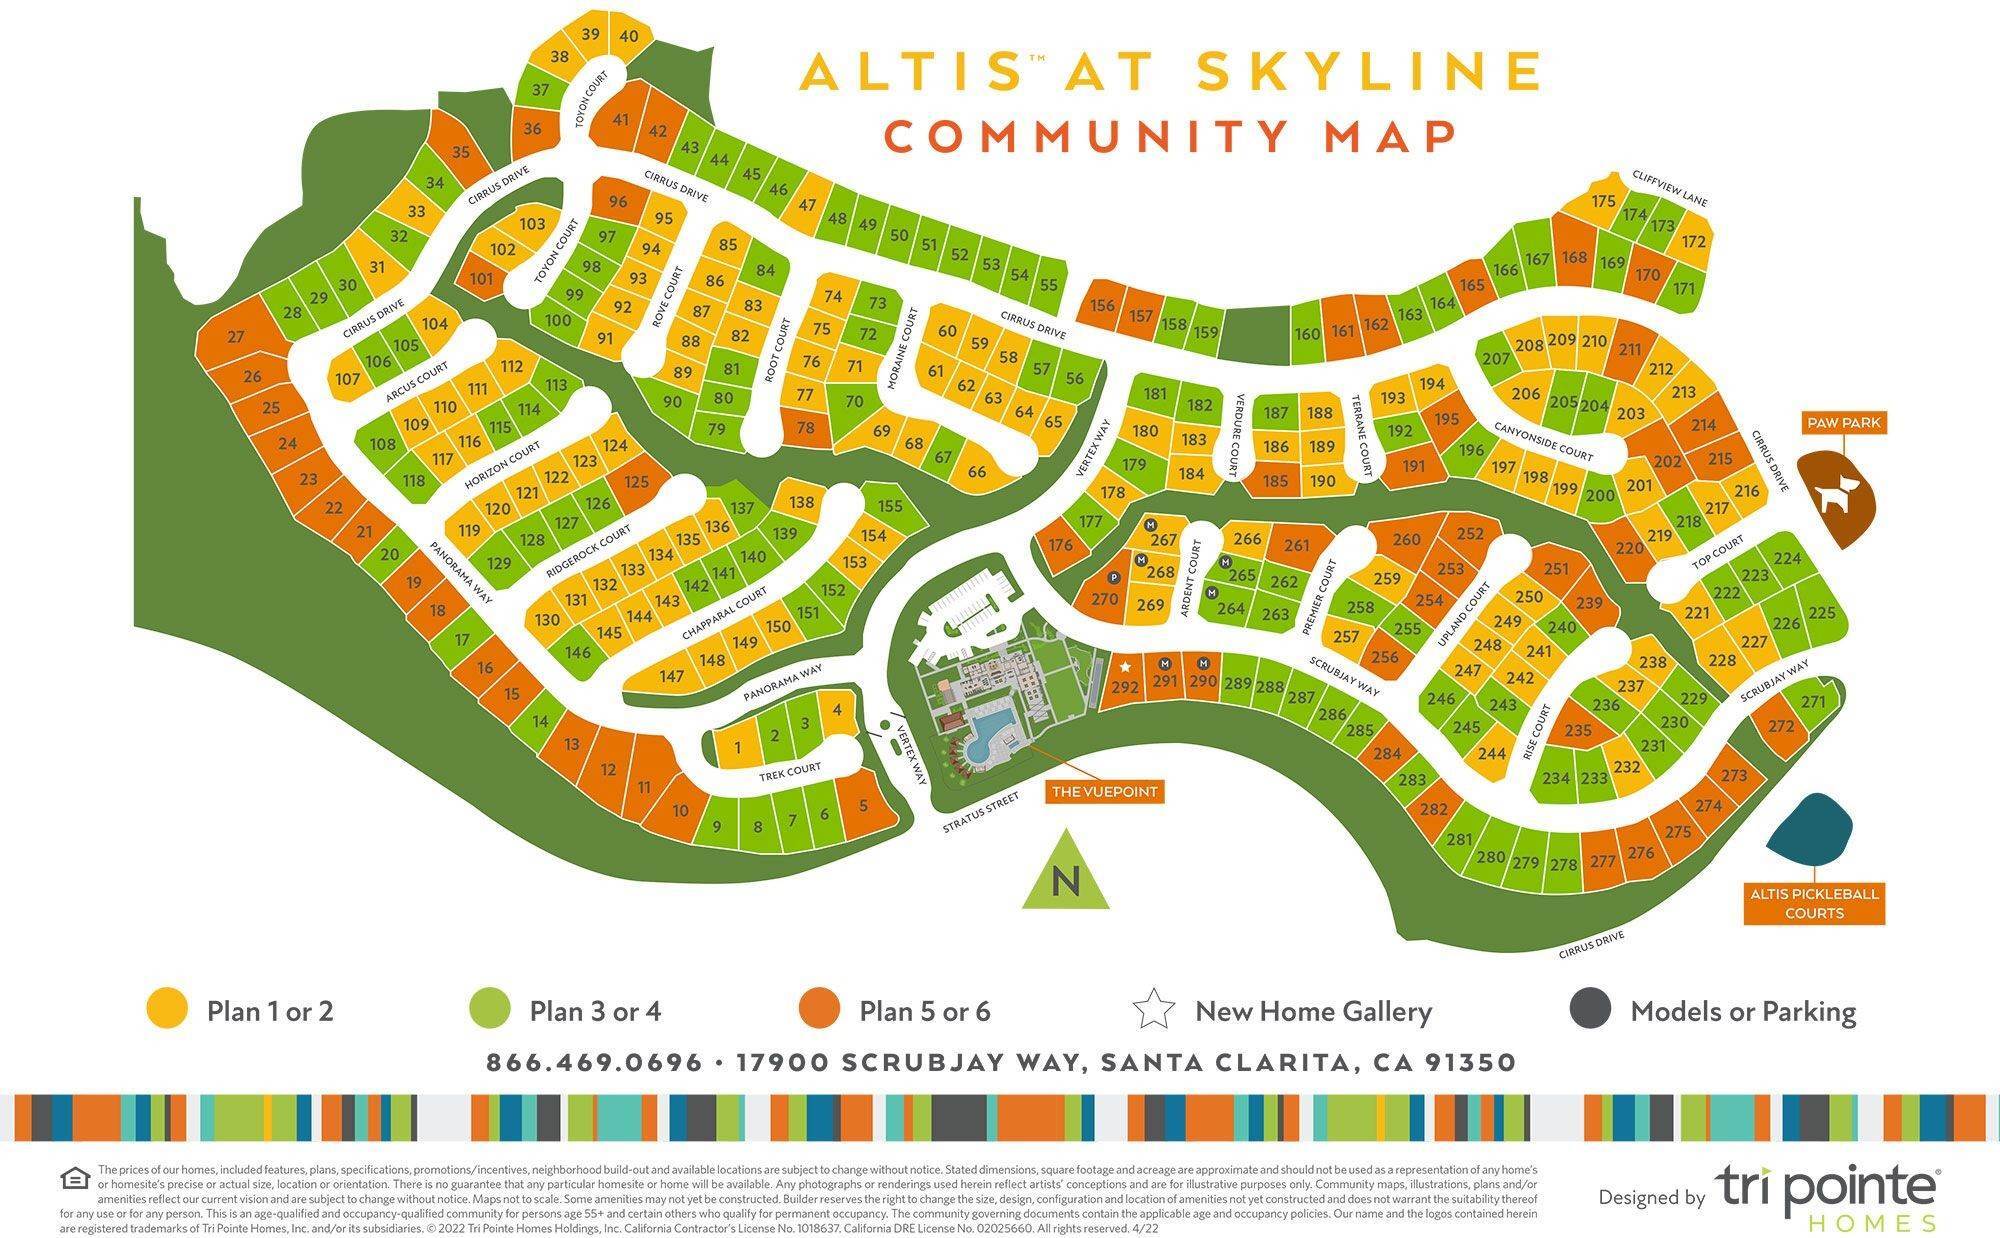 13. Altis at Skyline xây dựng tại 17900 Scrubjay Way, Santa Clarita, CA 91351